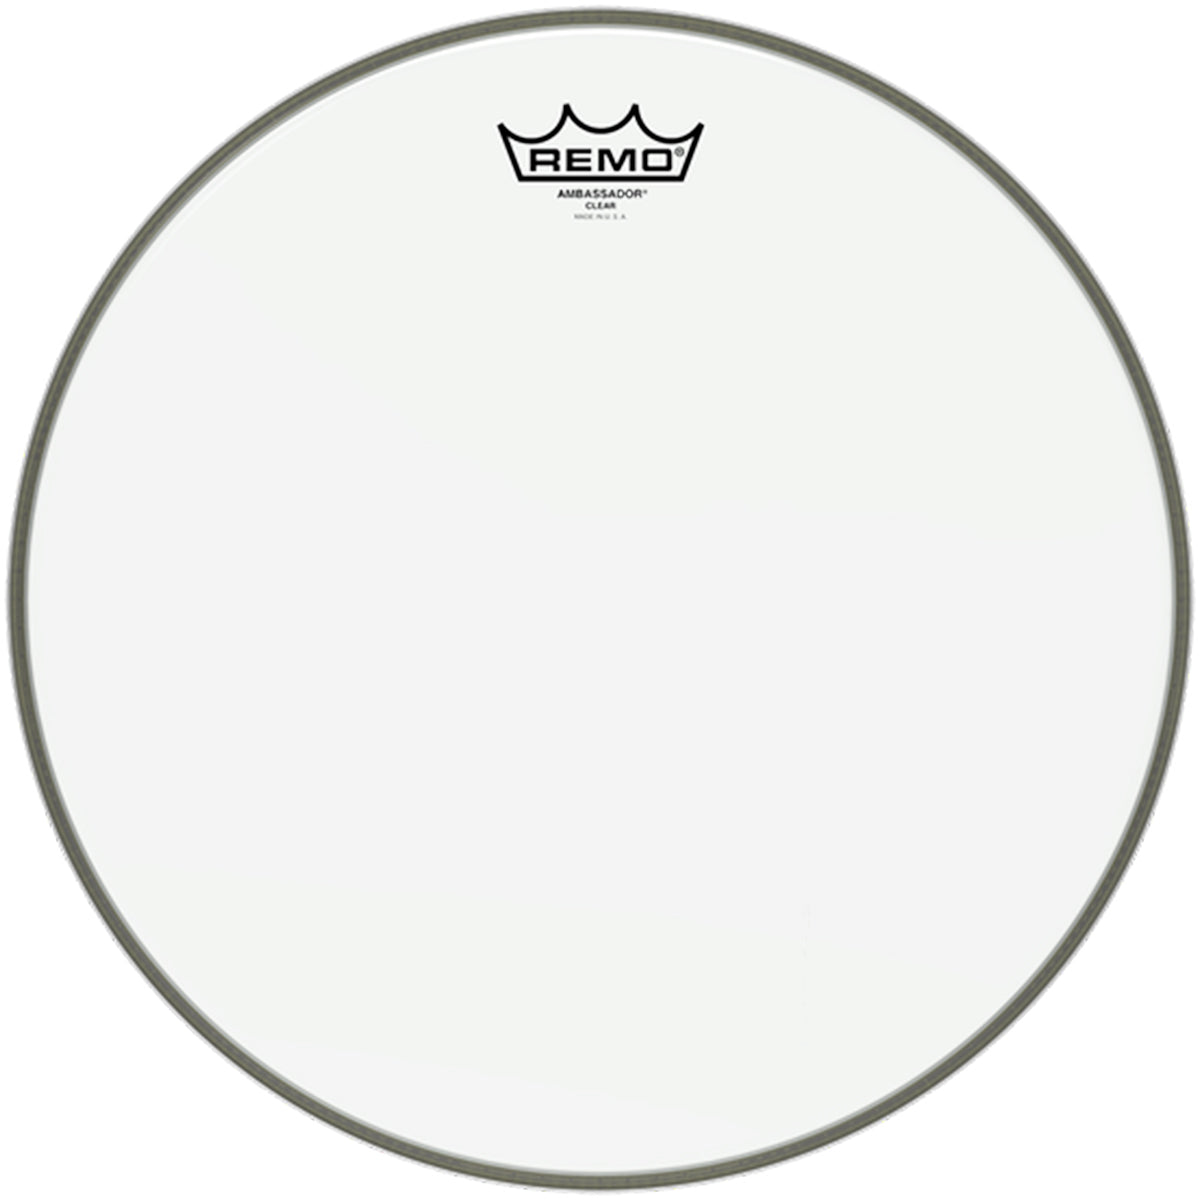 Remo BA-0316-00 Ambassador Drum Head Skin 16 Inch Clear